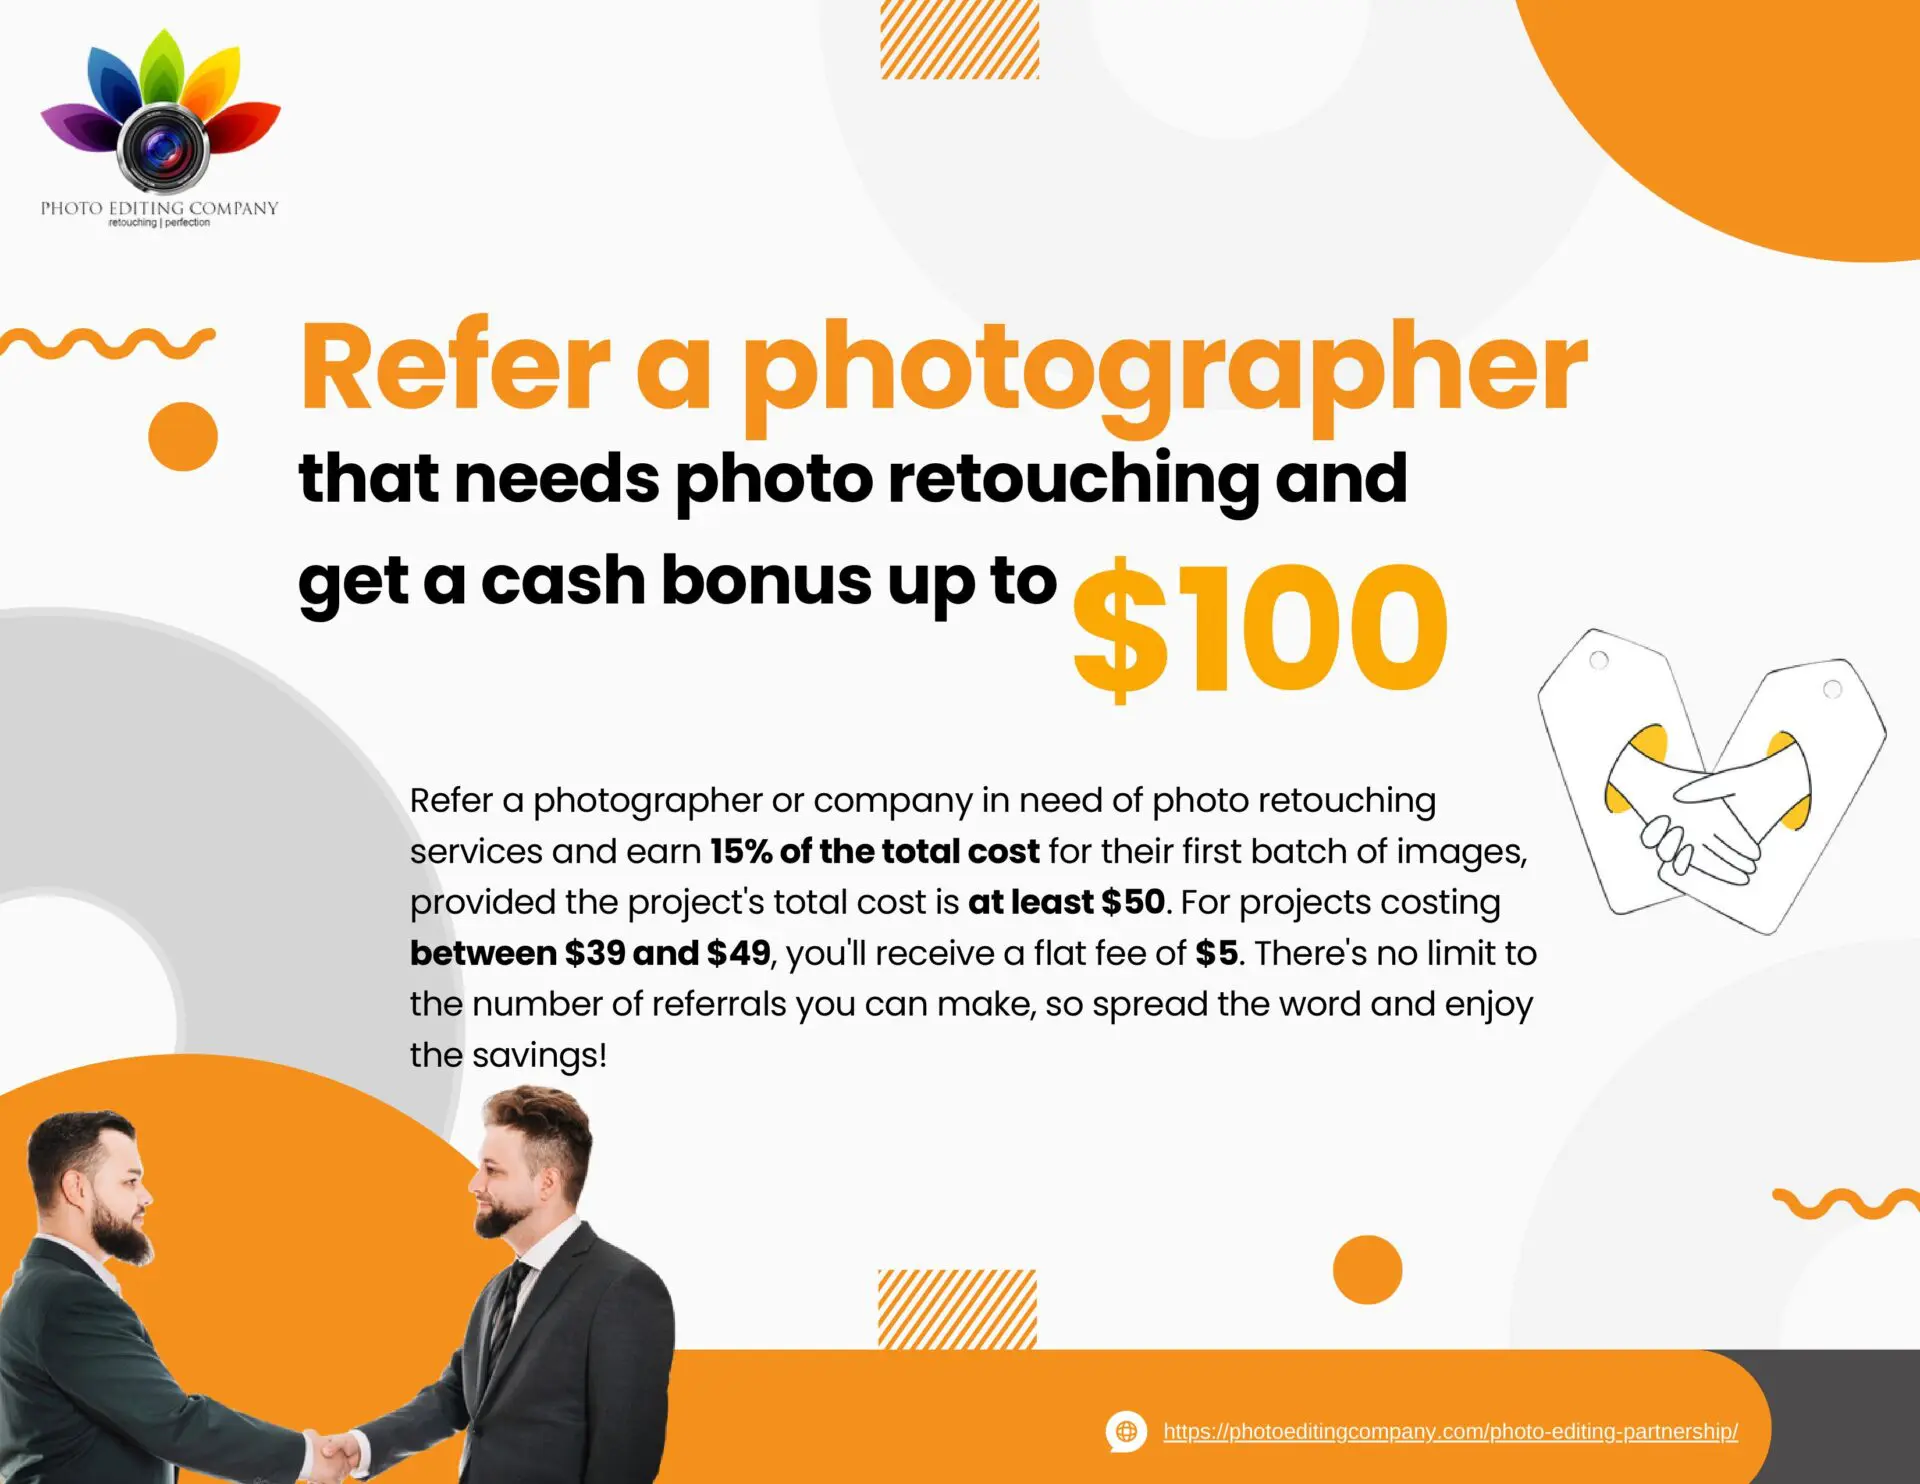 photo editing company referral partnership